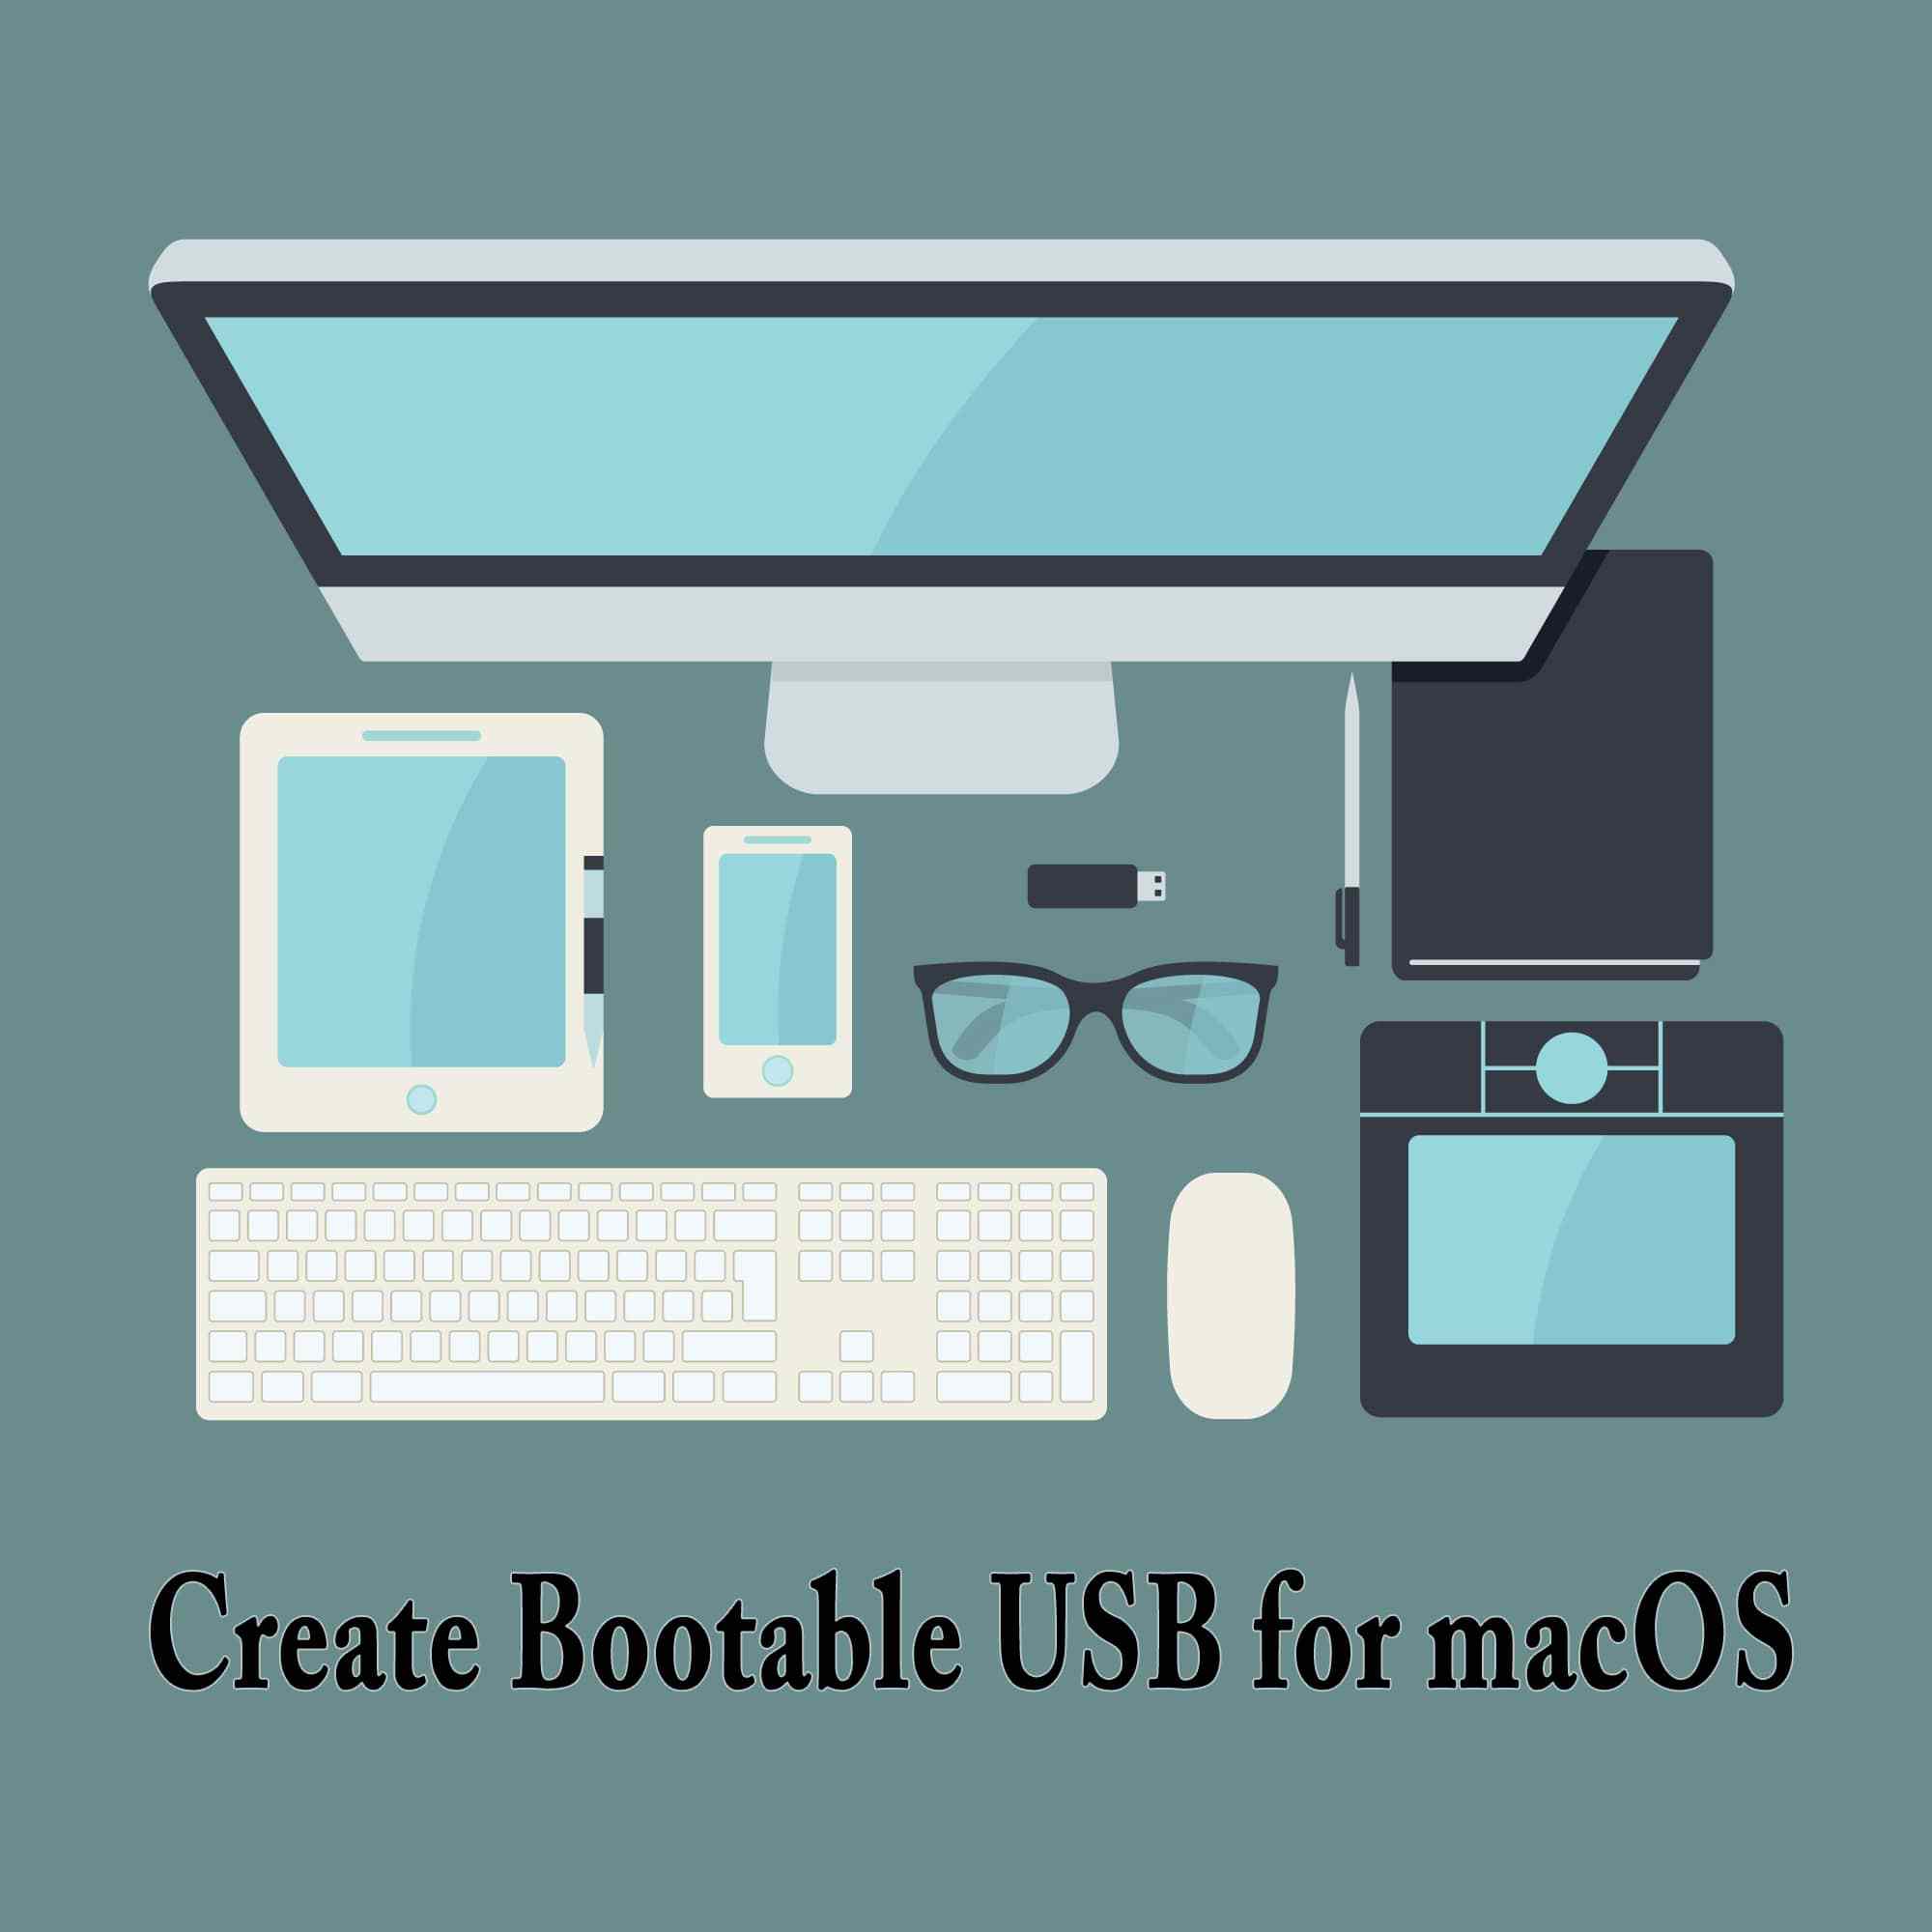 windows 10 bootable usb from iso mac